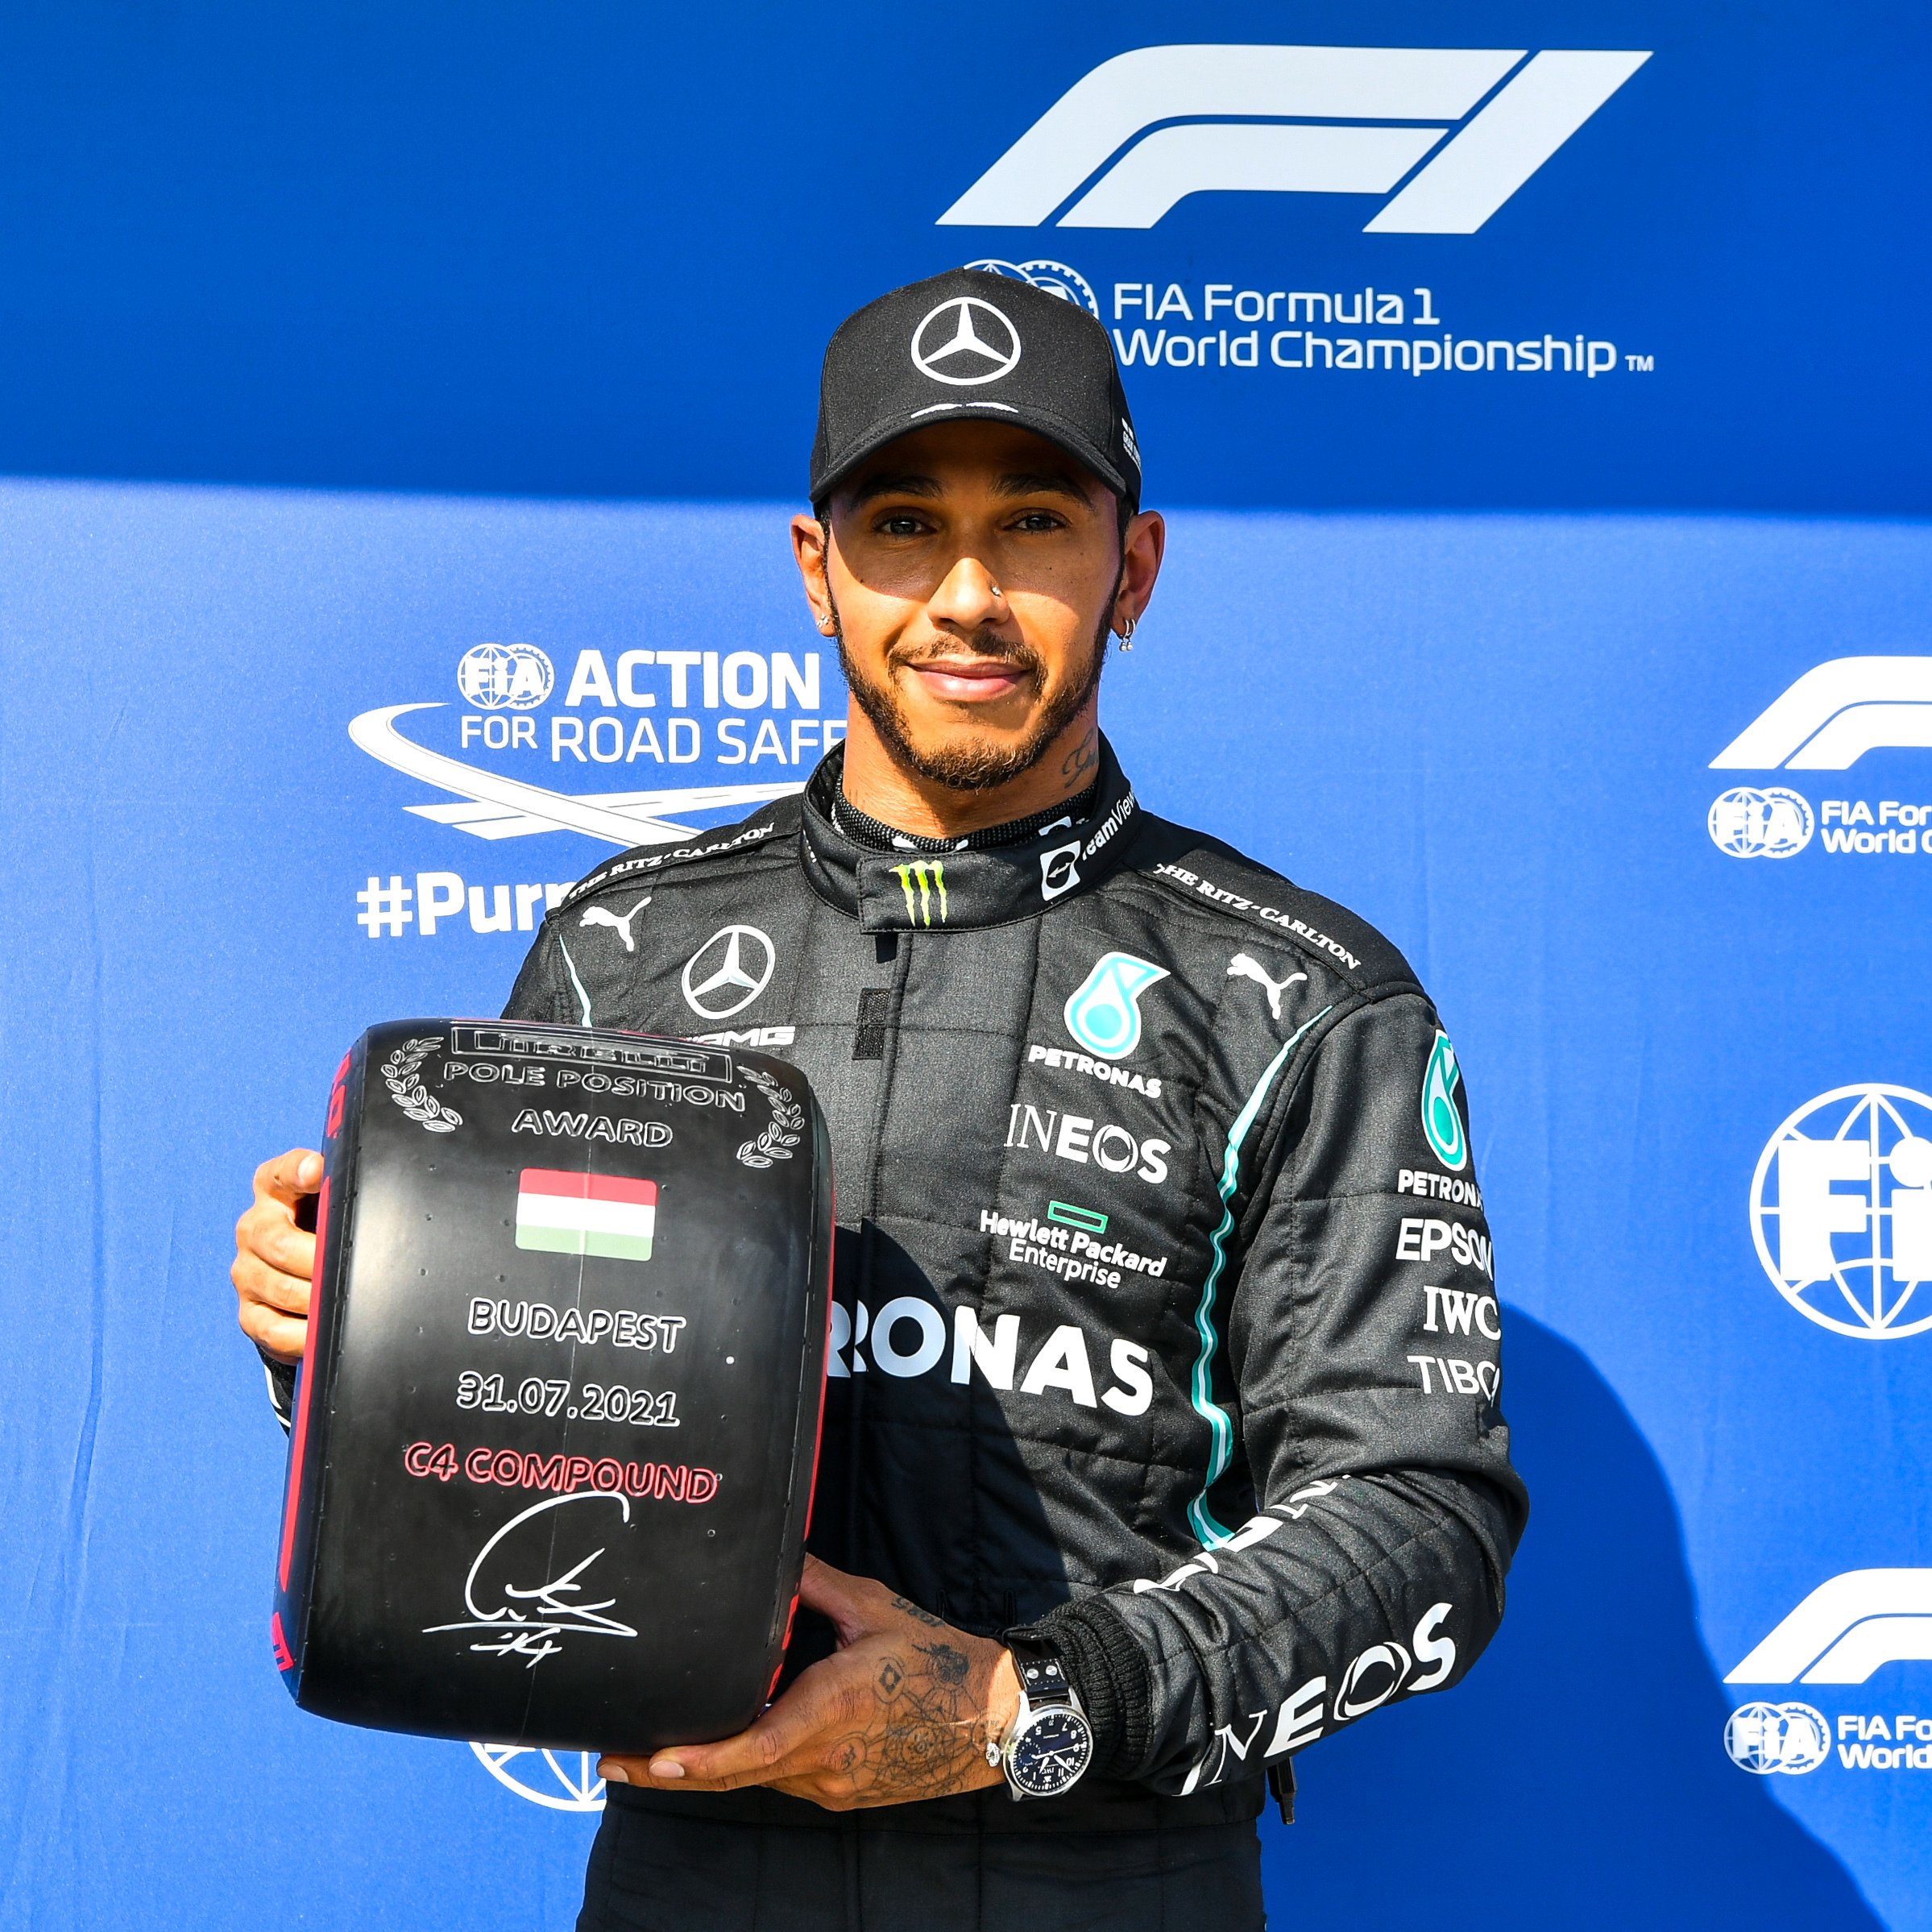 101 career pole for Lewis Hamilton